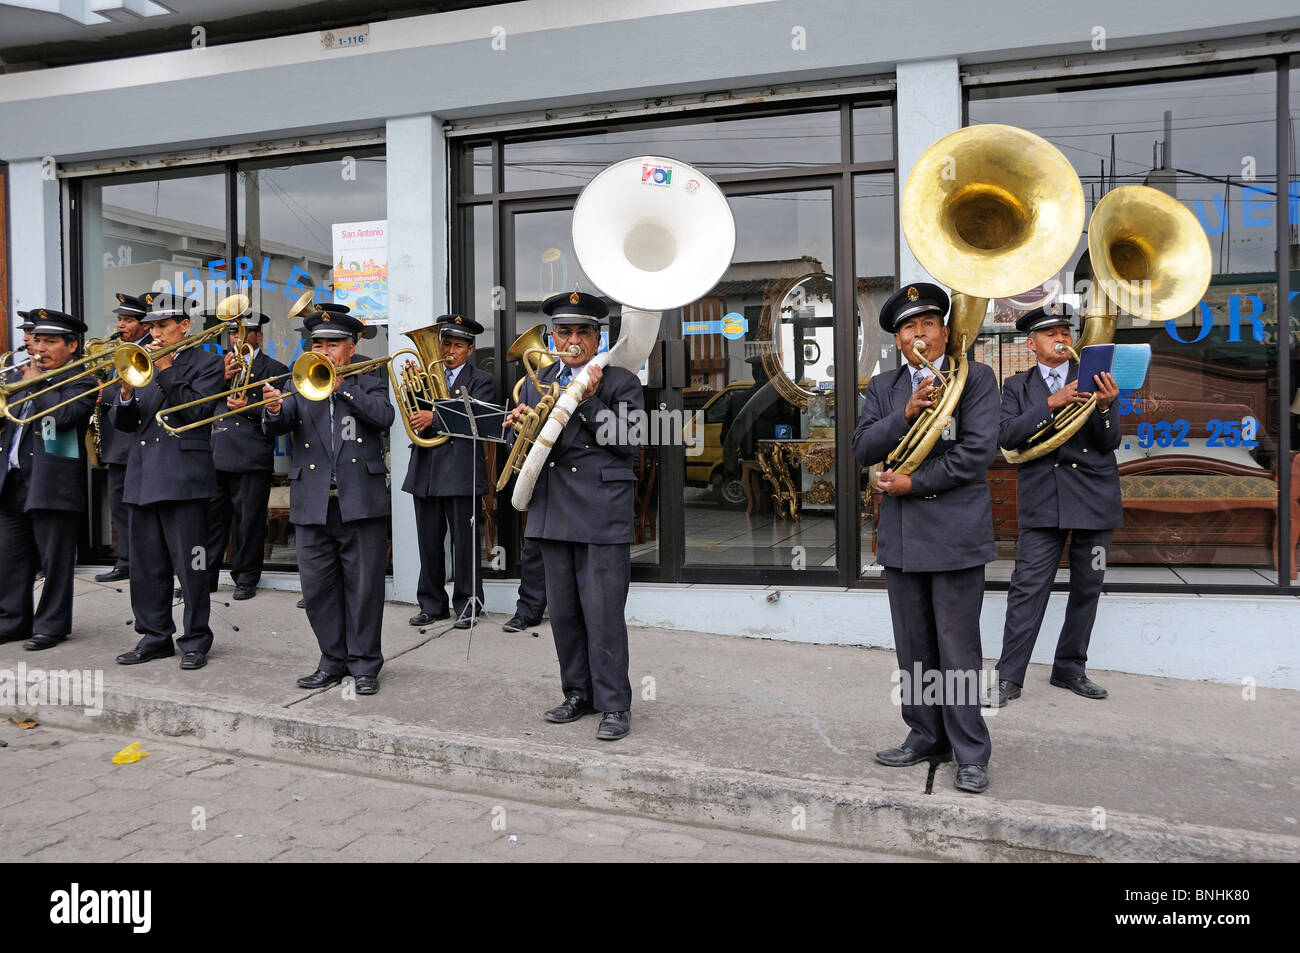 Ecuador militärische Musik Band Ibarra Stadt Anden Musiker Uniformen Menschen Konzert Gruppe Männer Stockfoto